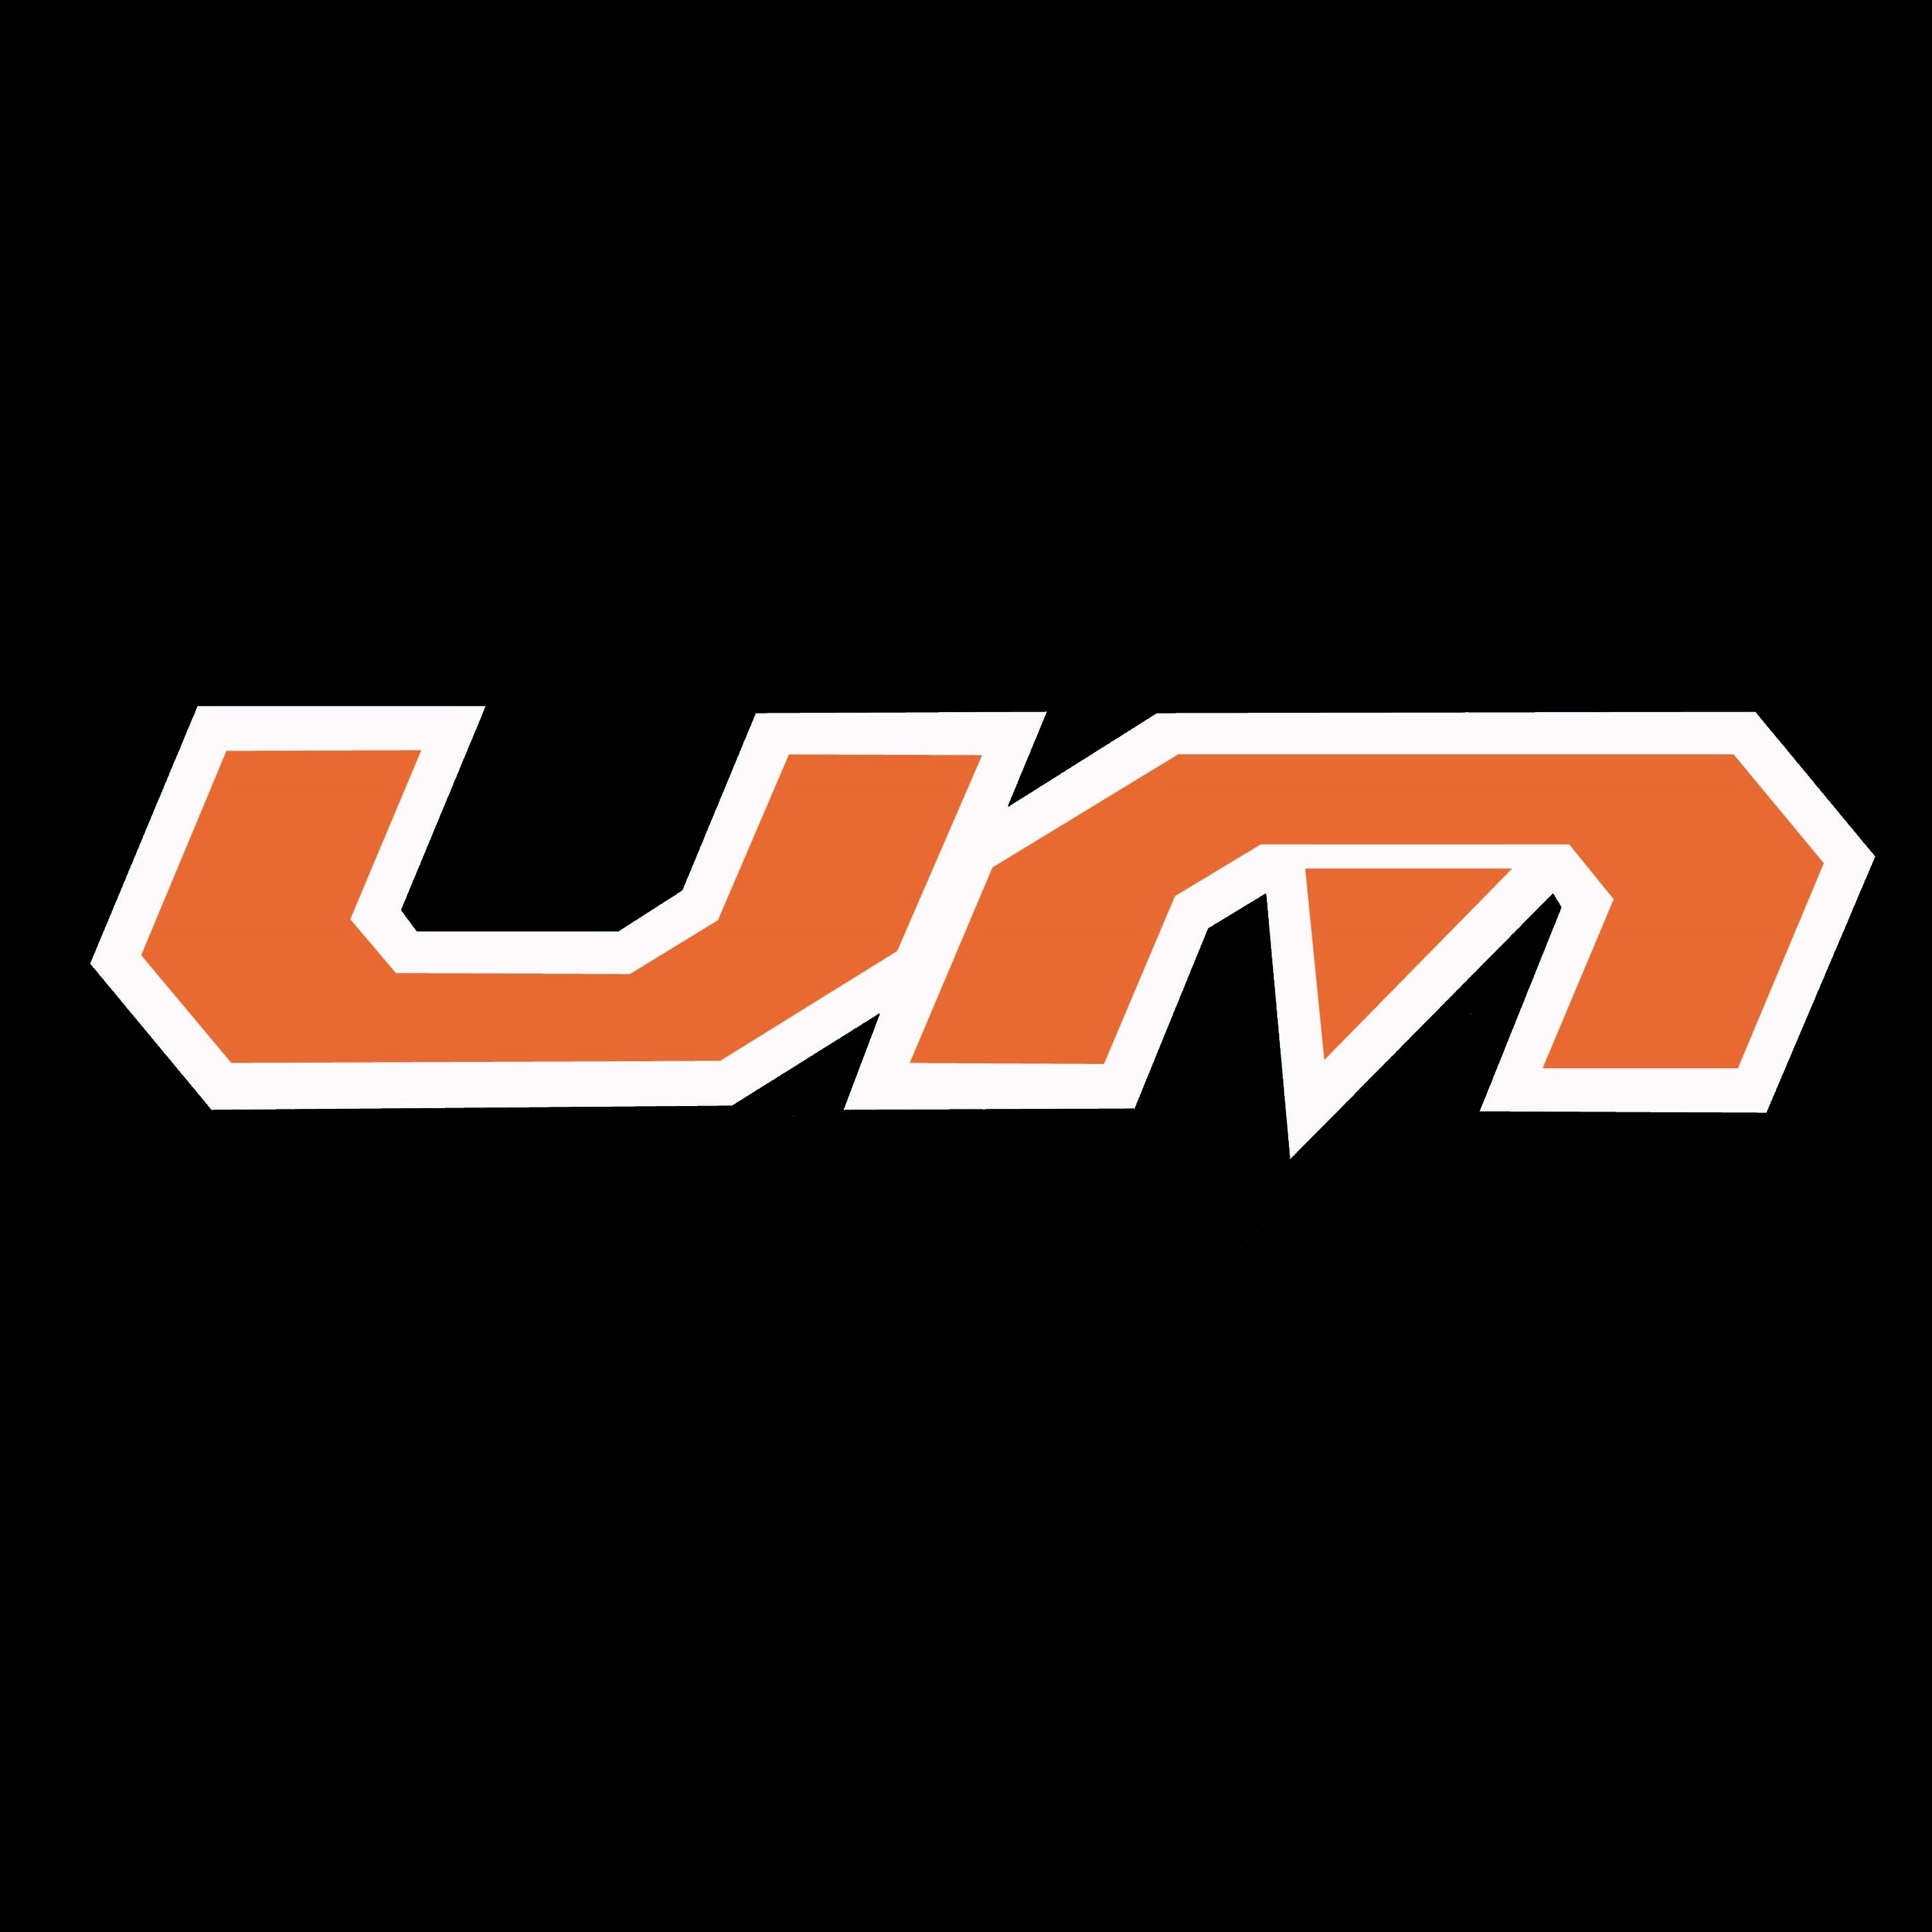 UM-Motorcycles-Logo